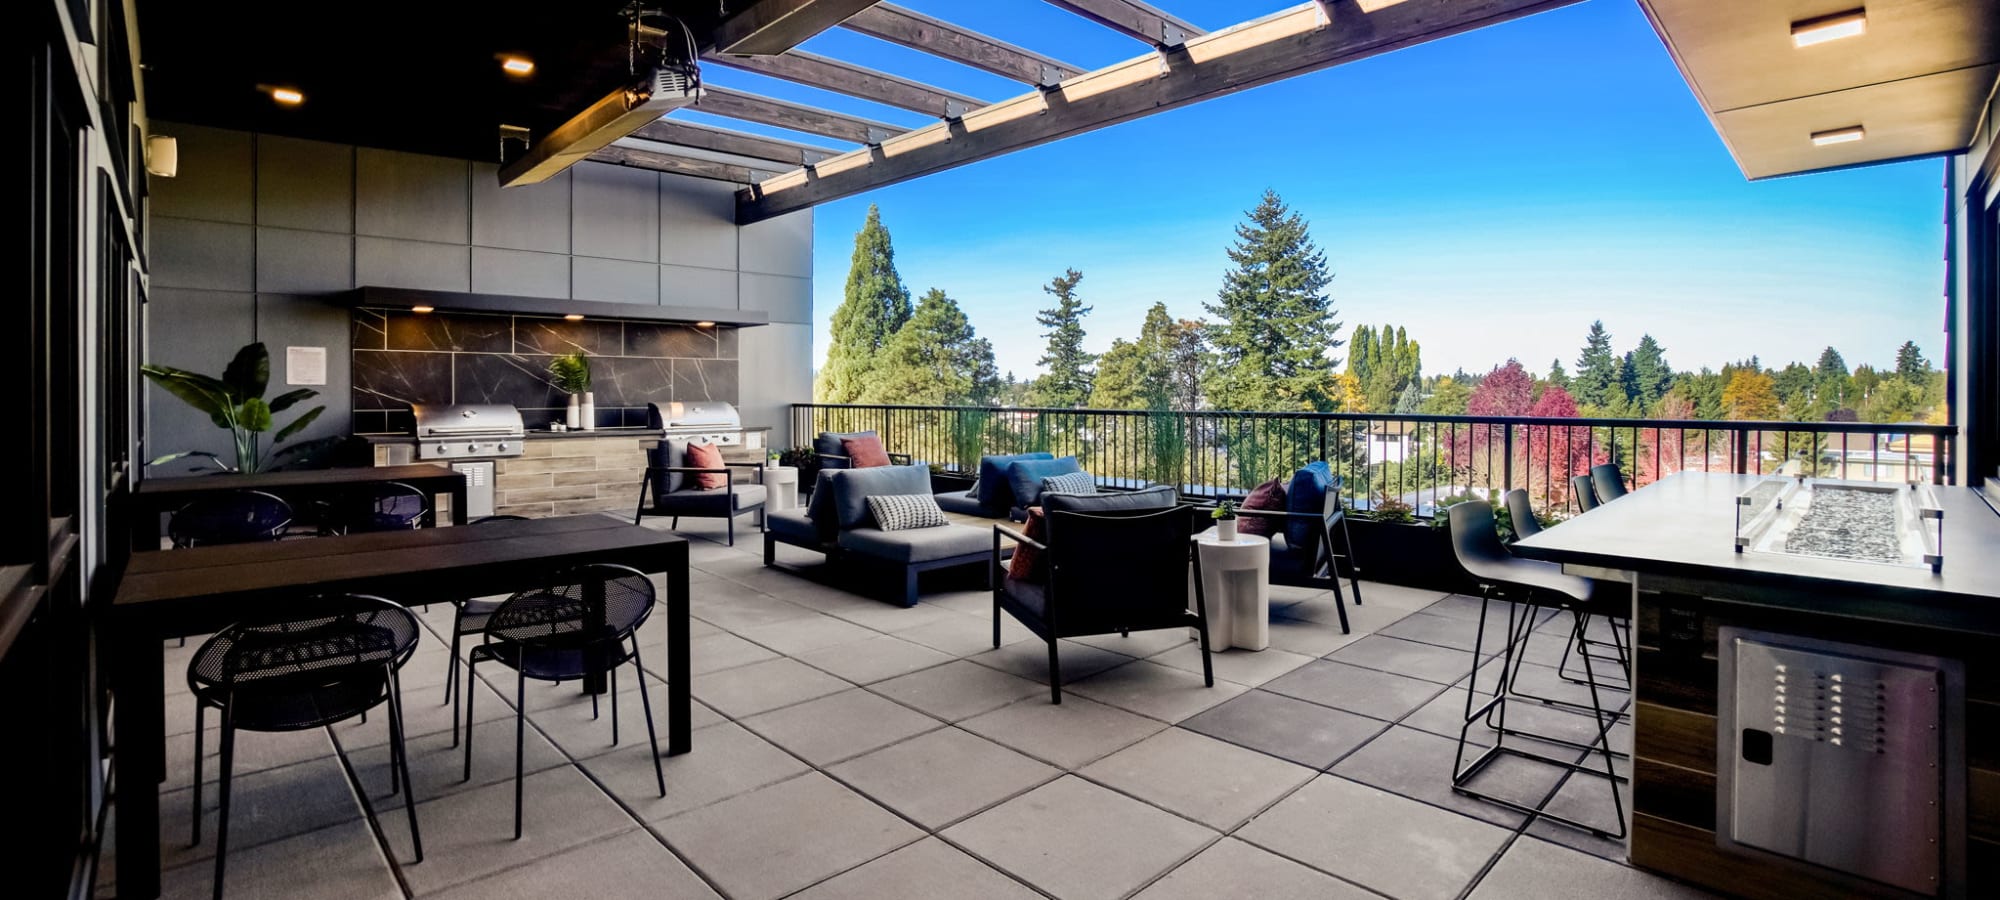 Apartments at Kinect @ Burien in Burien, Washington